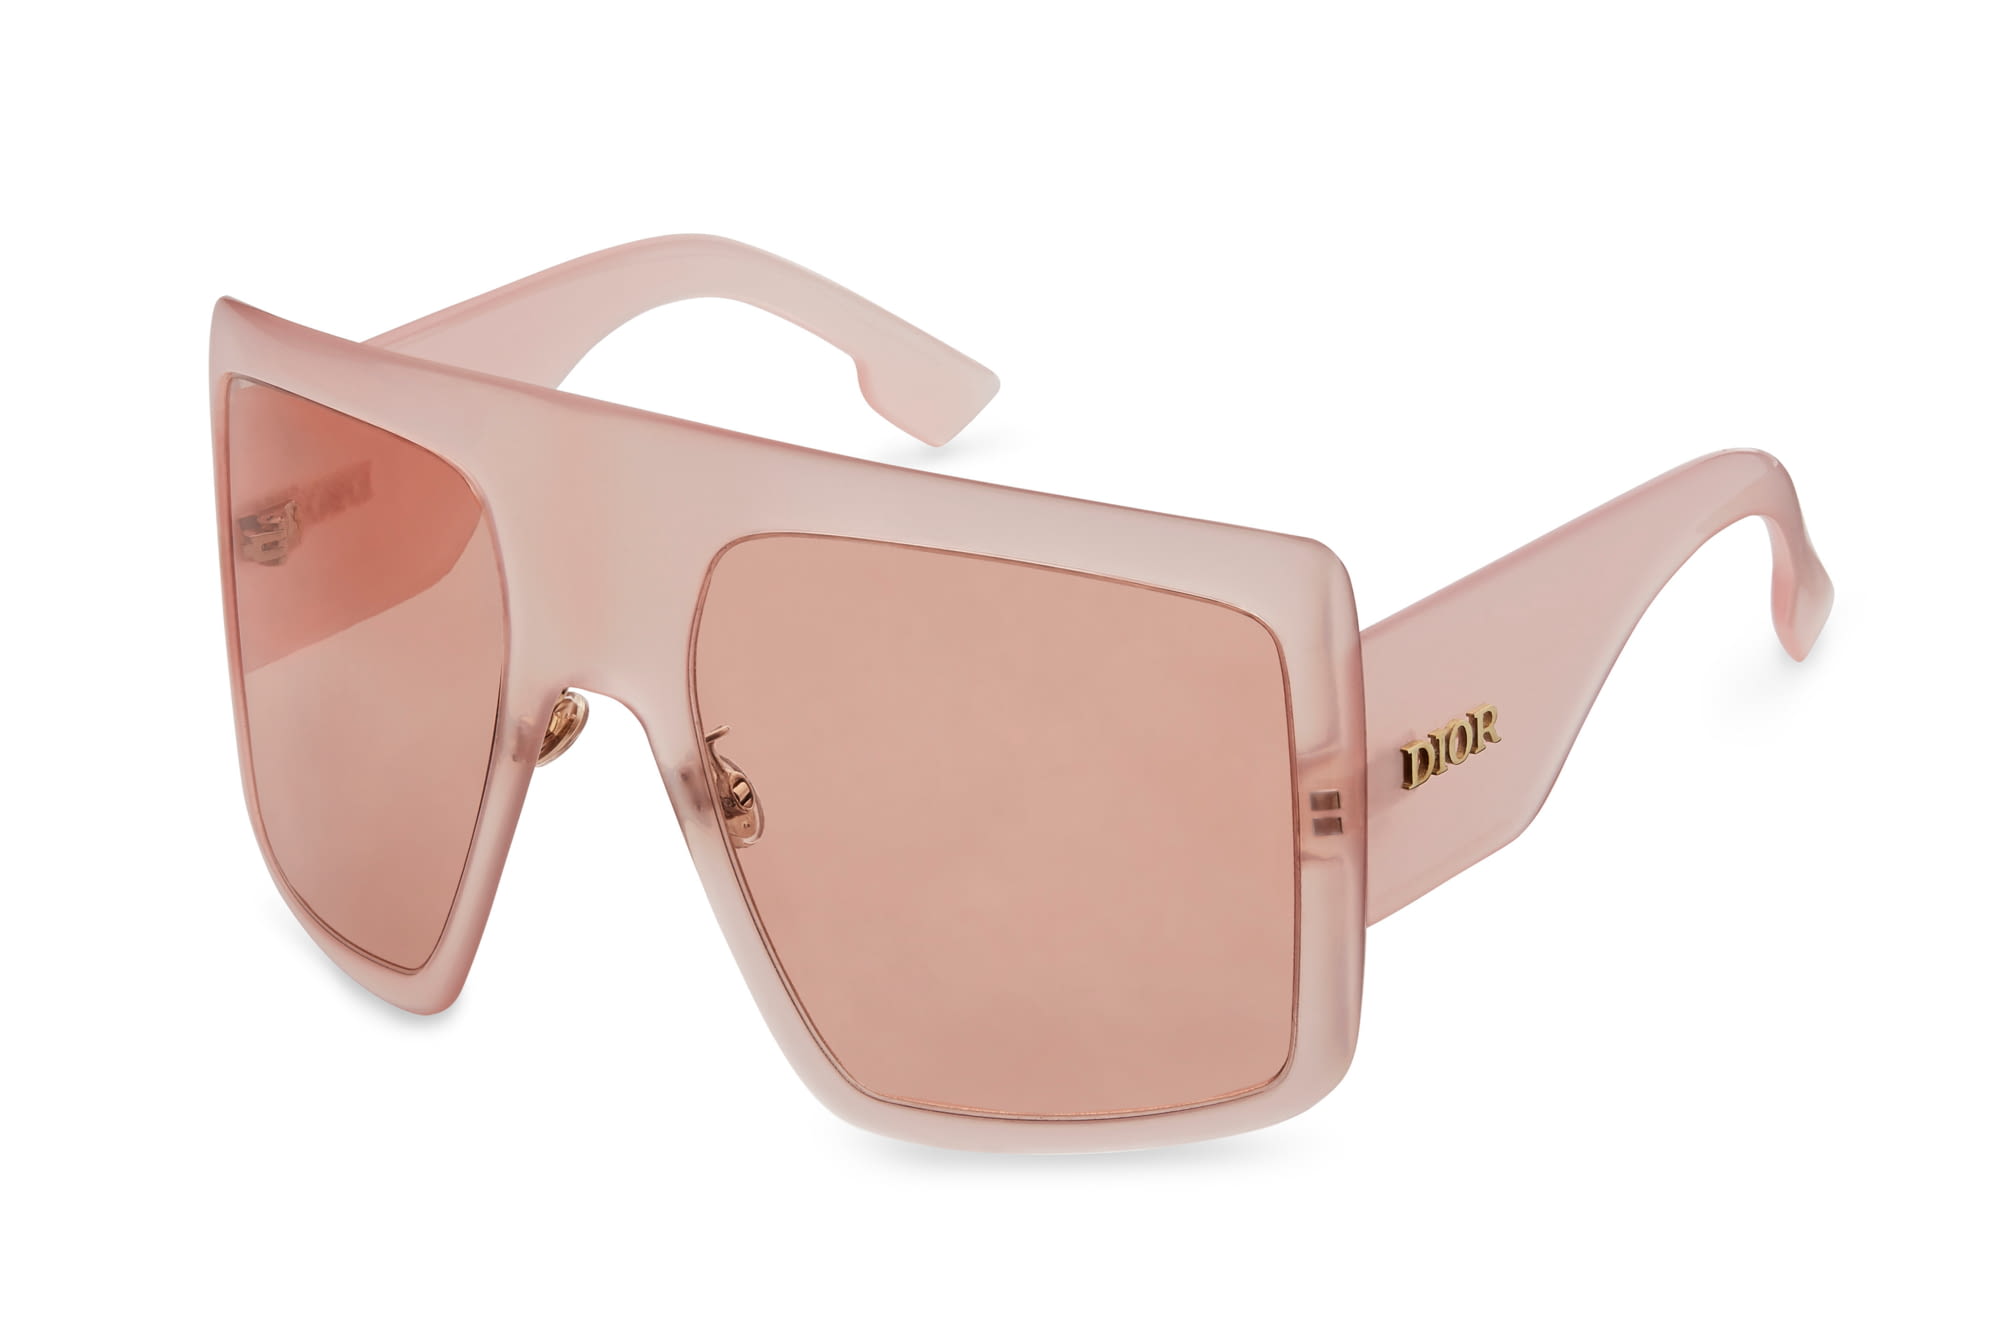 dior sunglasses spring summer 2019